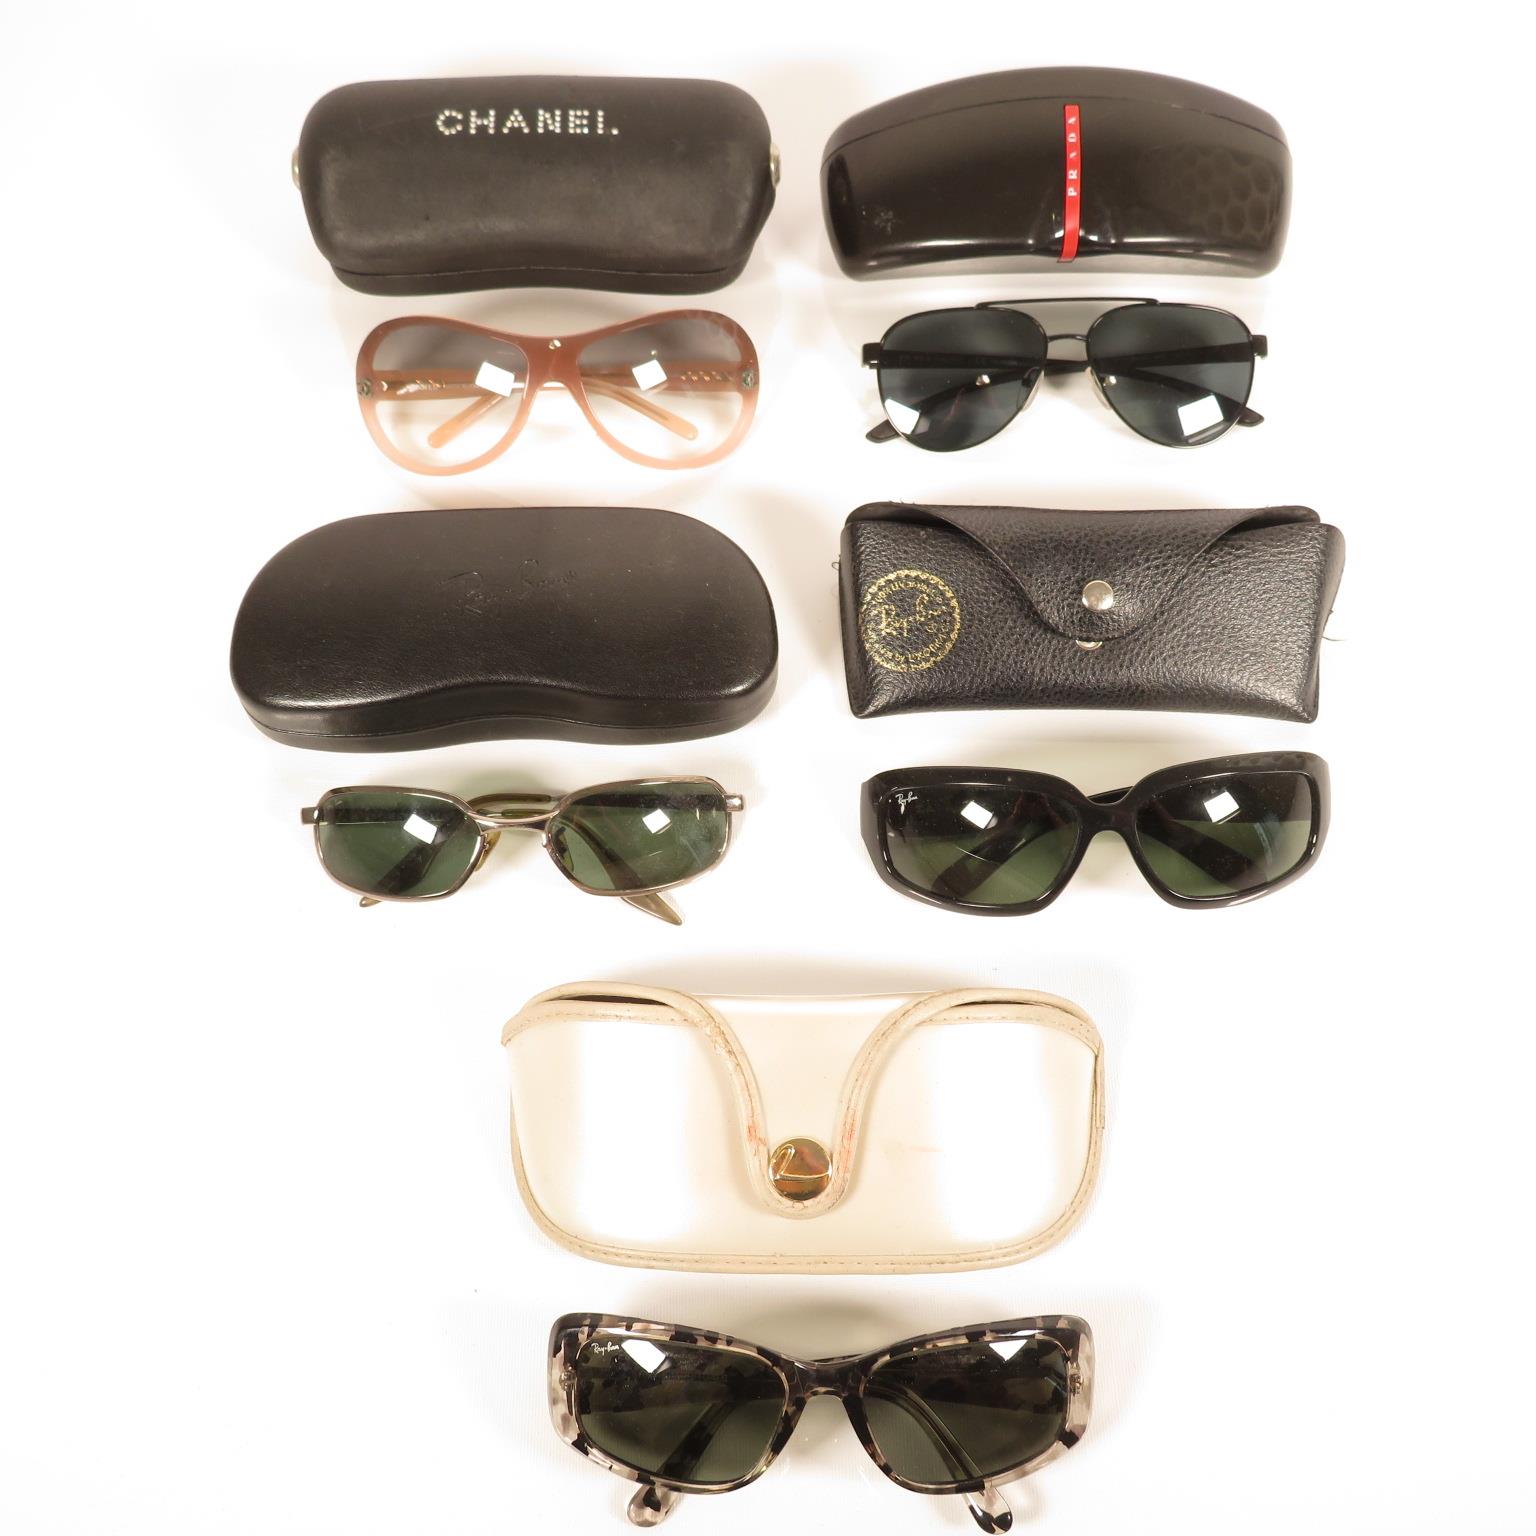 5x sets of Ray Ban sunglasses -